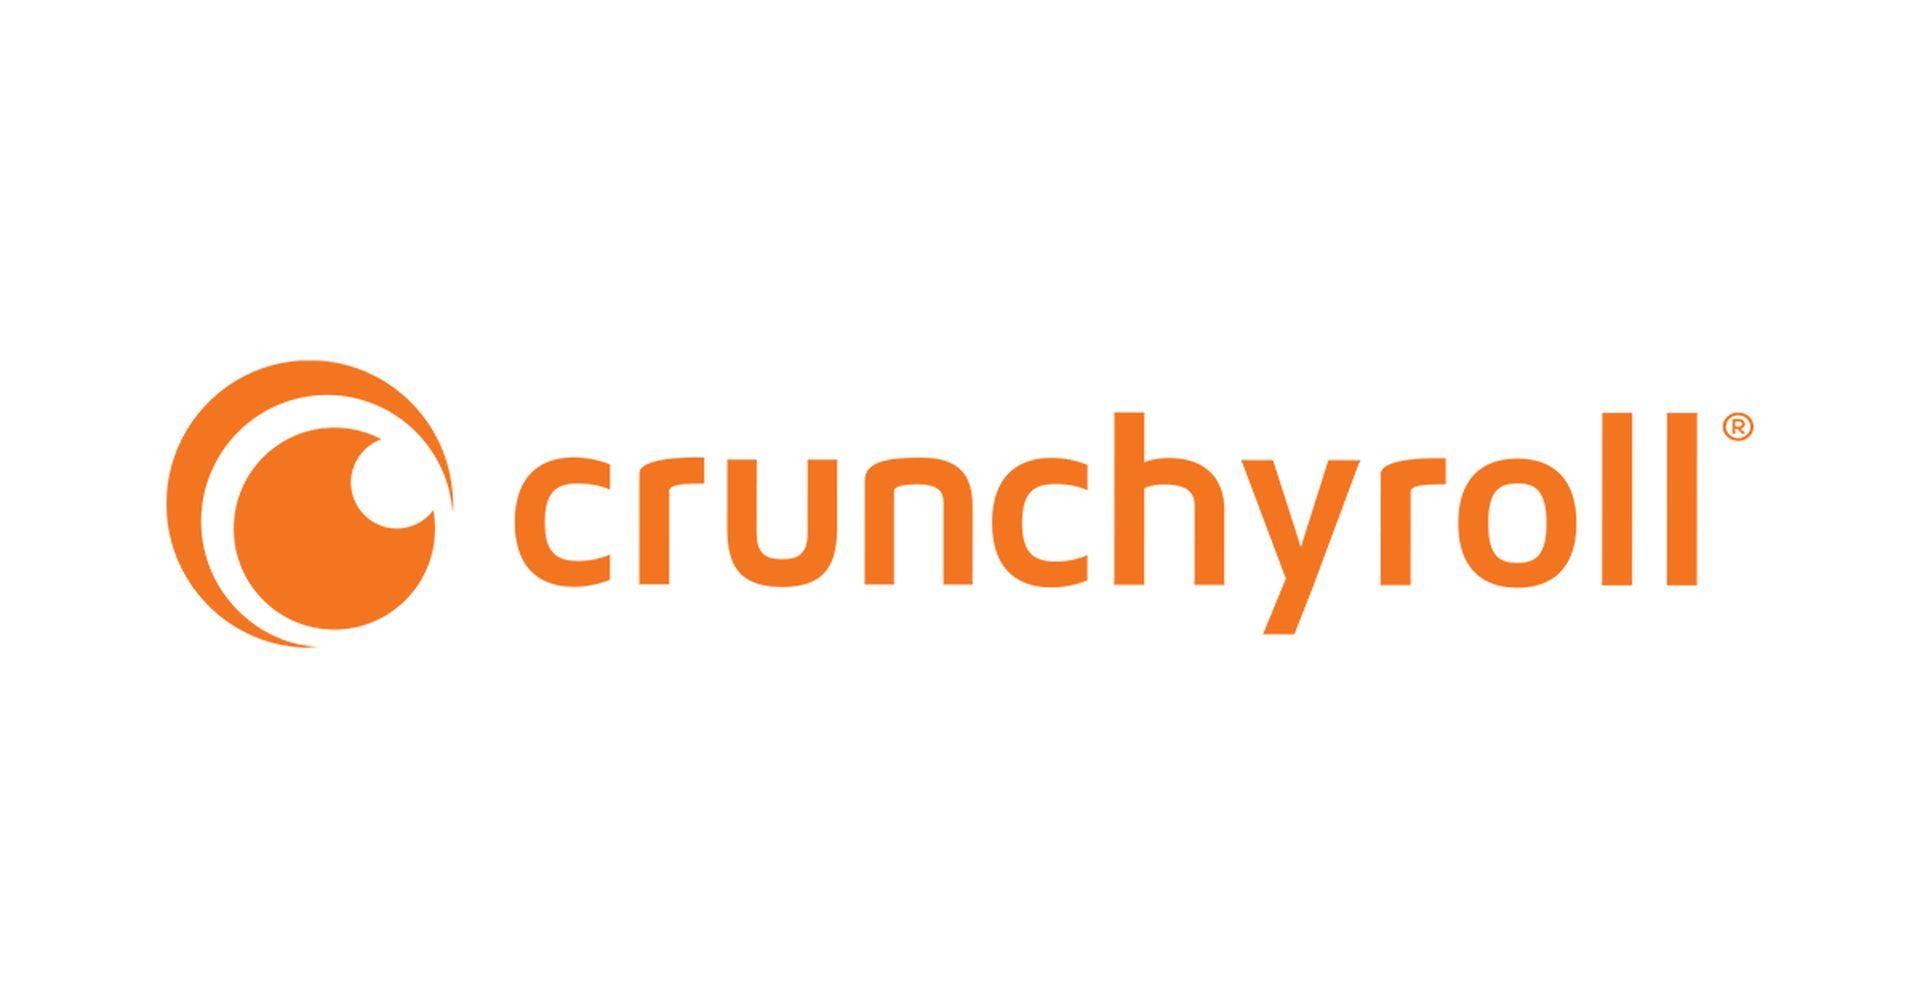 Fixed: Crunchyroll next episode is wrong / autoplay not working